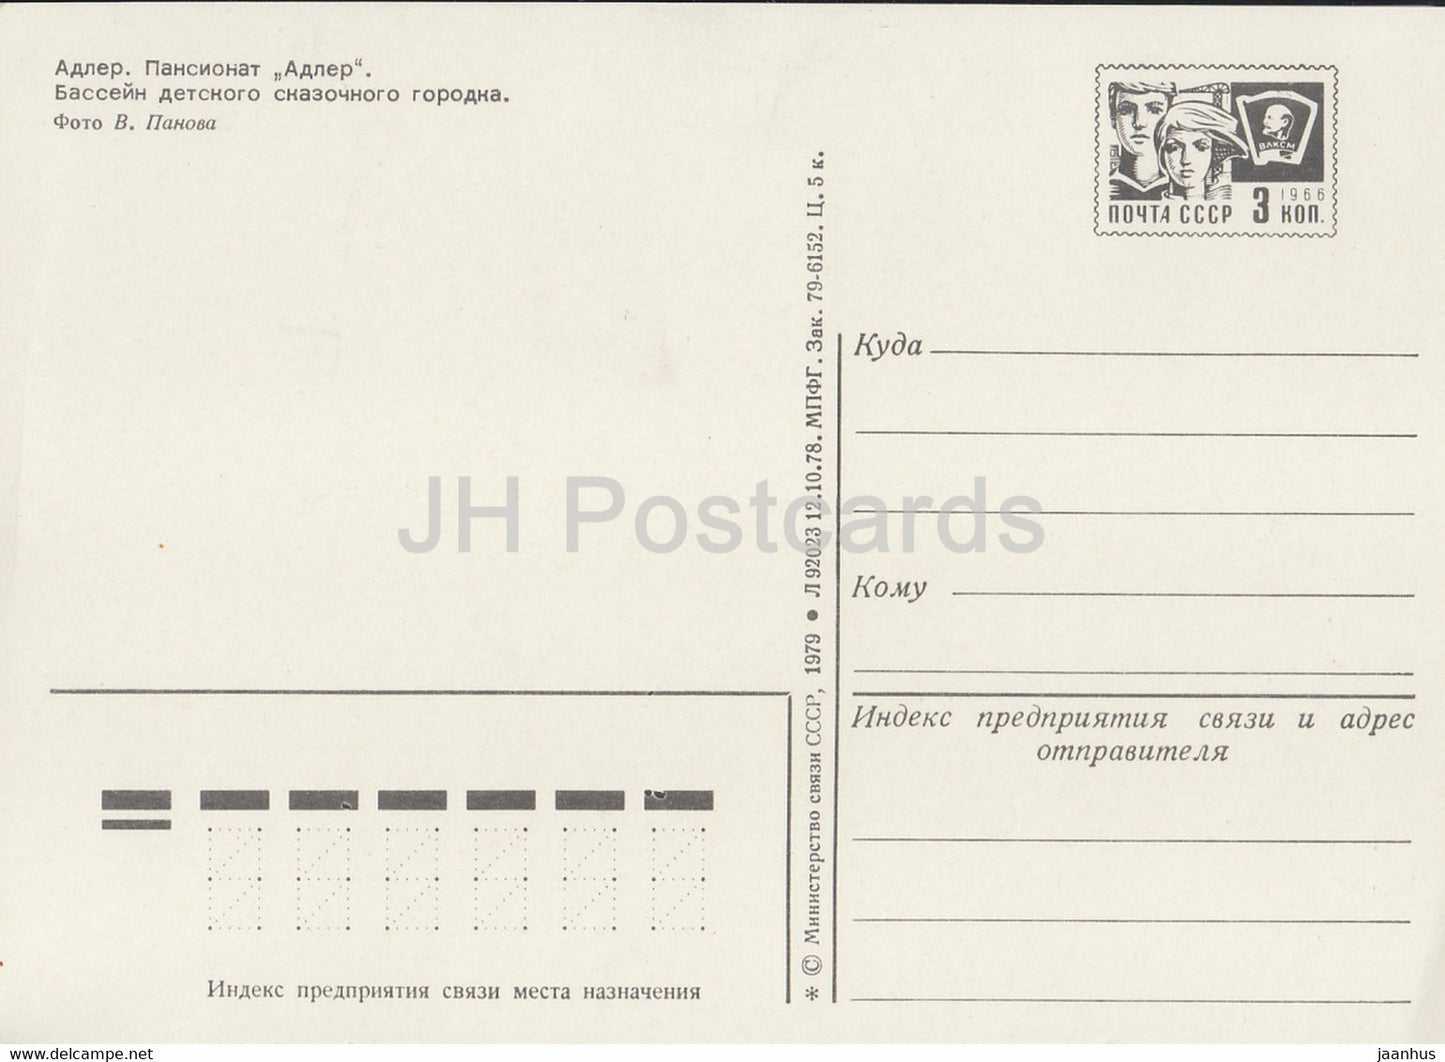 Adler - pension home Adler - pool of children's fairytale town - 1 - postal stationery - 1979 - Russia USSR - unused